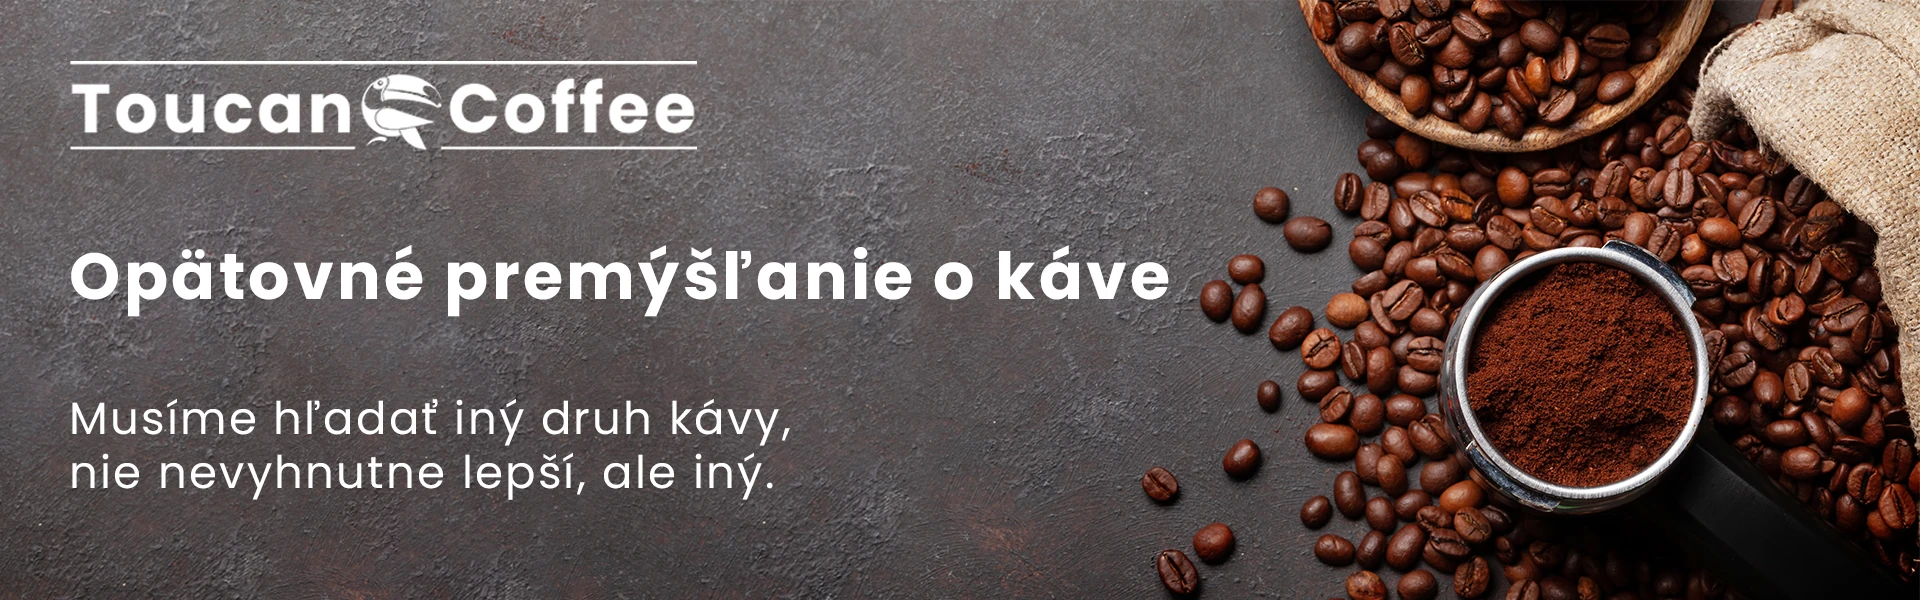 toucancoffee.sk